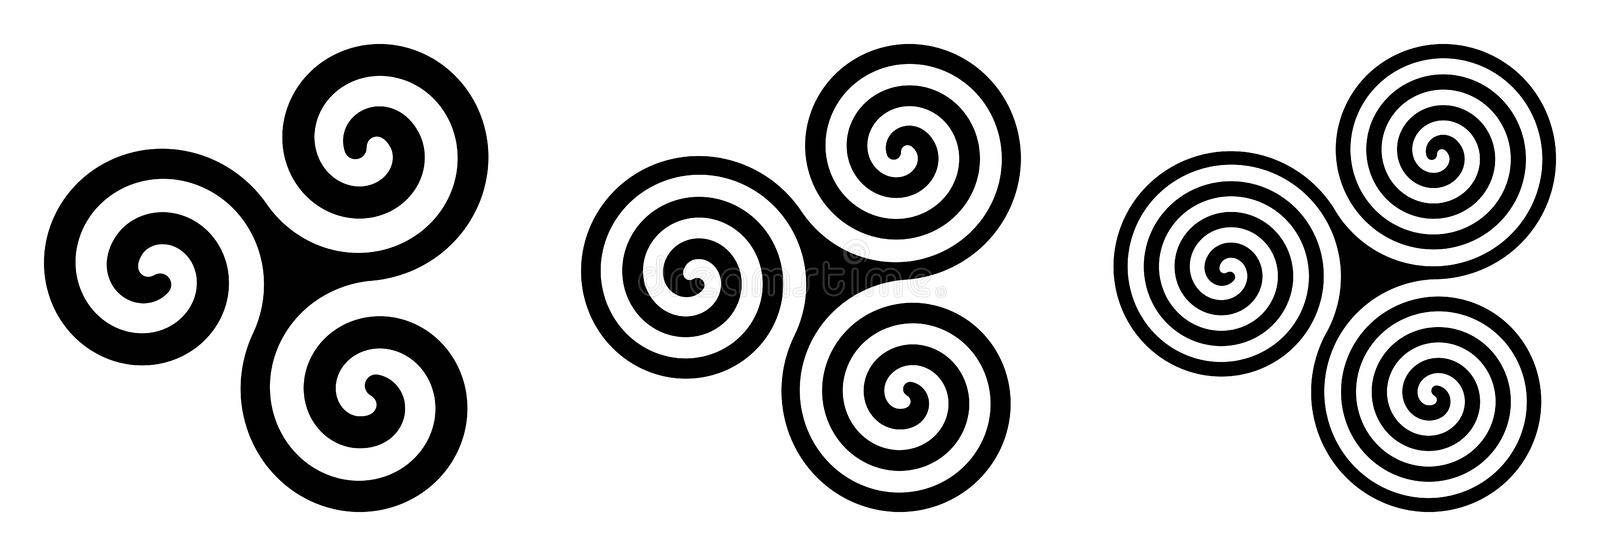 Celtic Triskelion And Alternatives Background